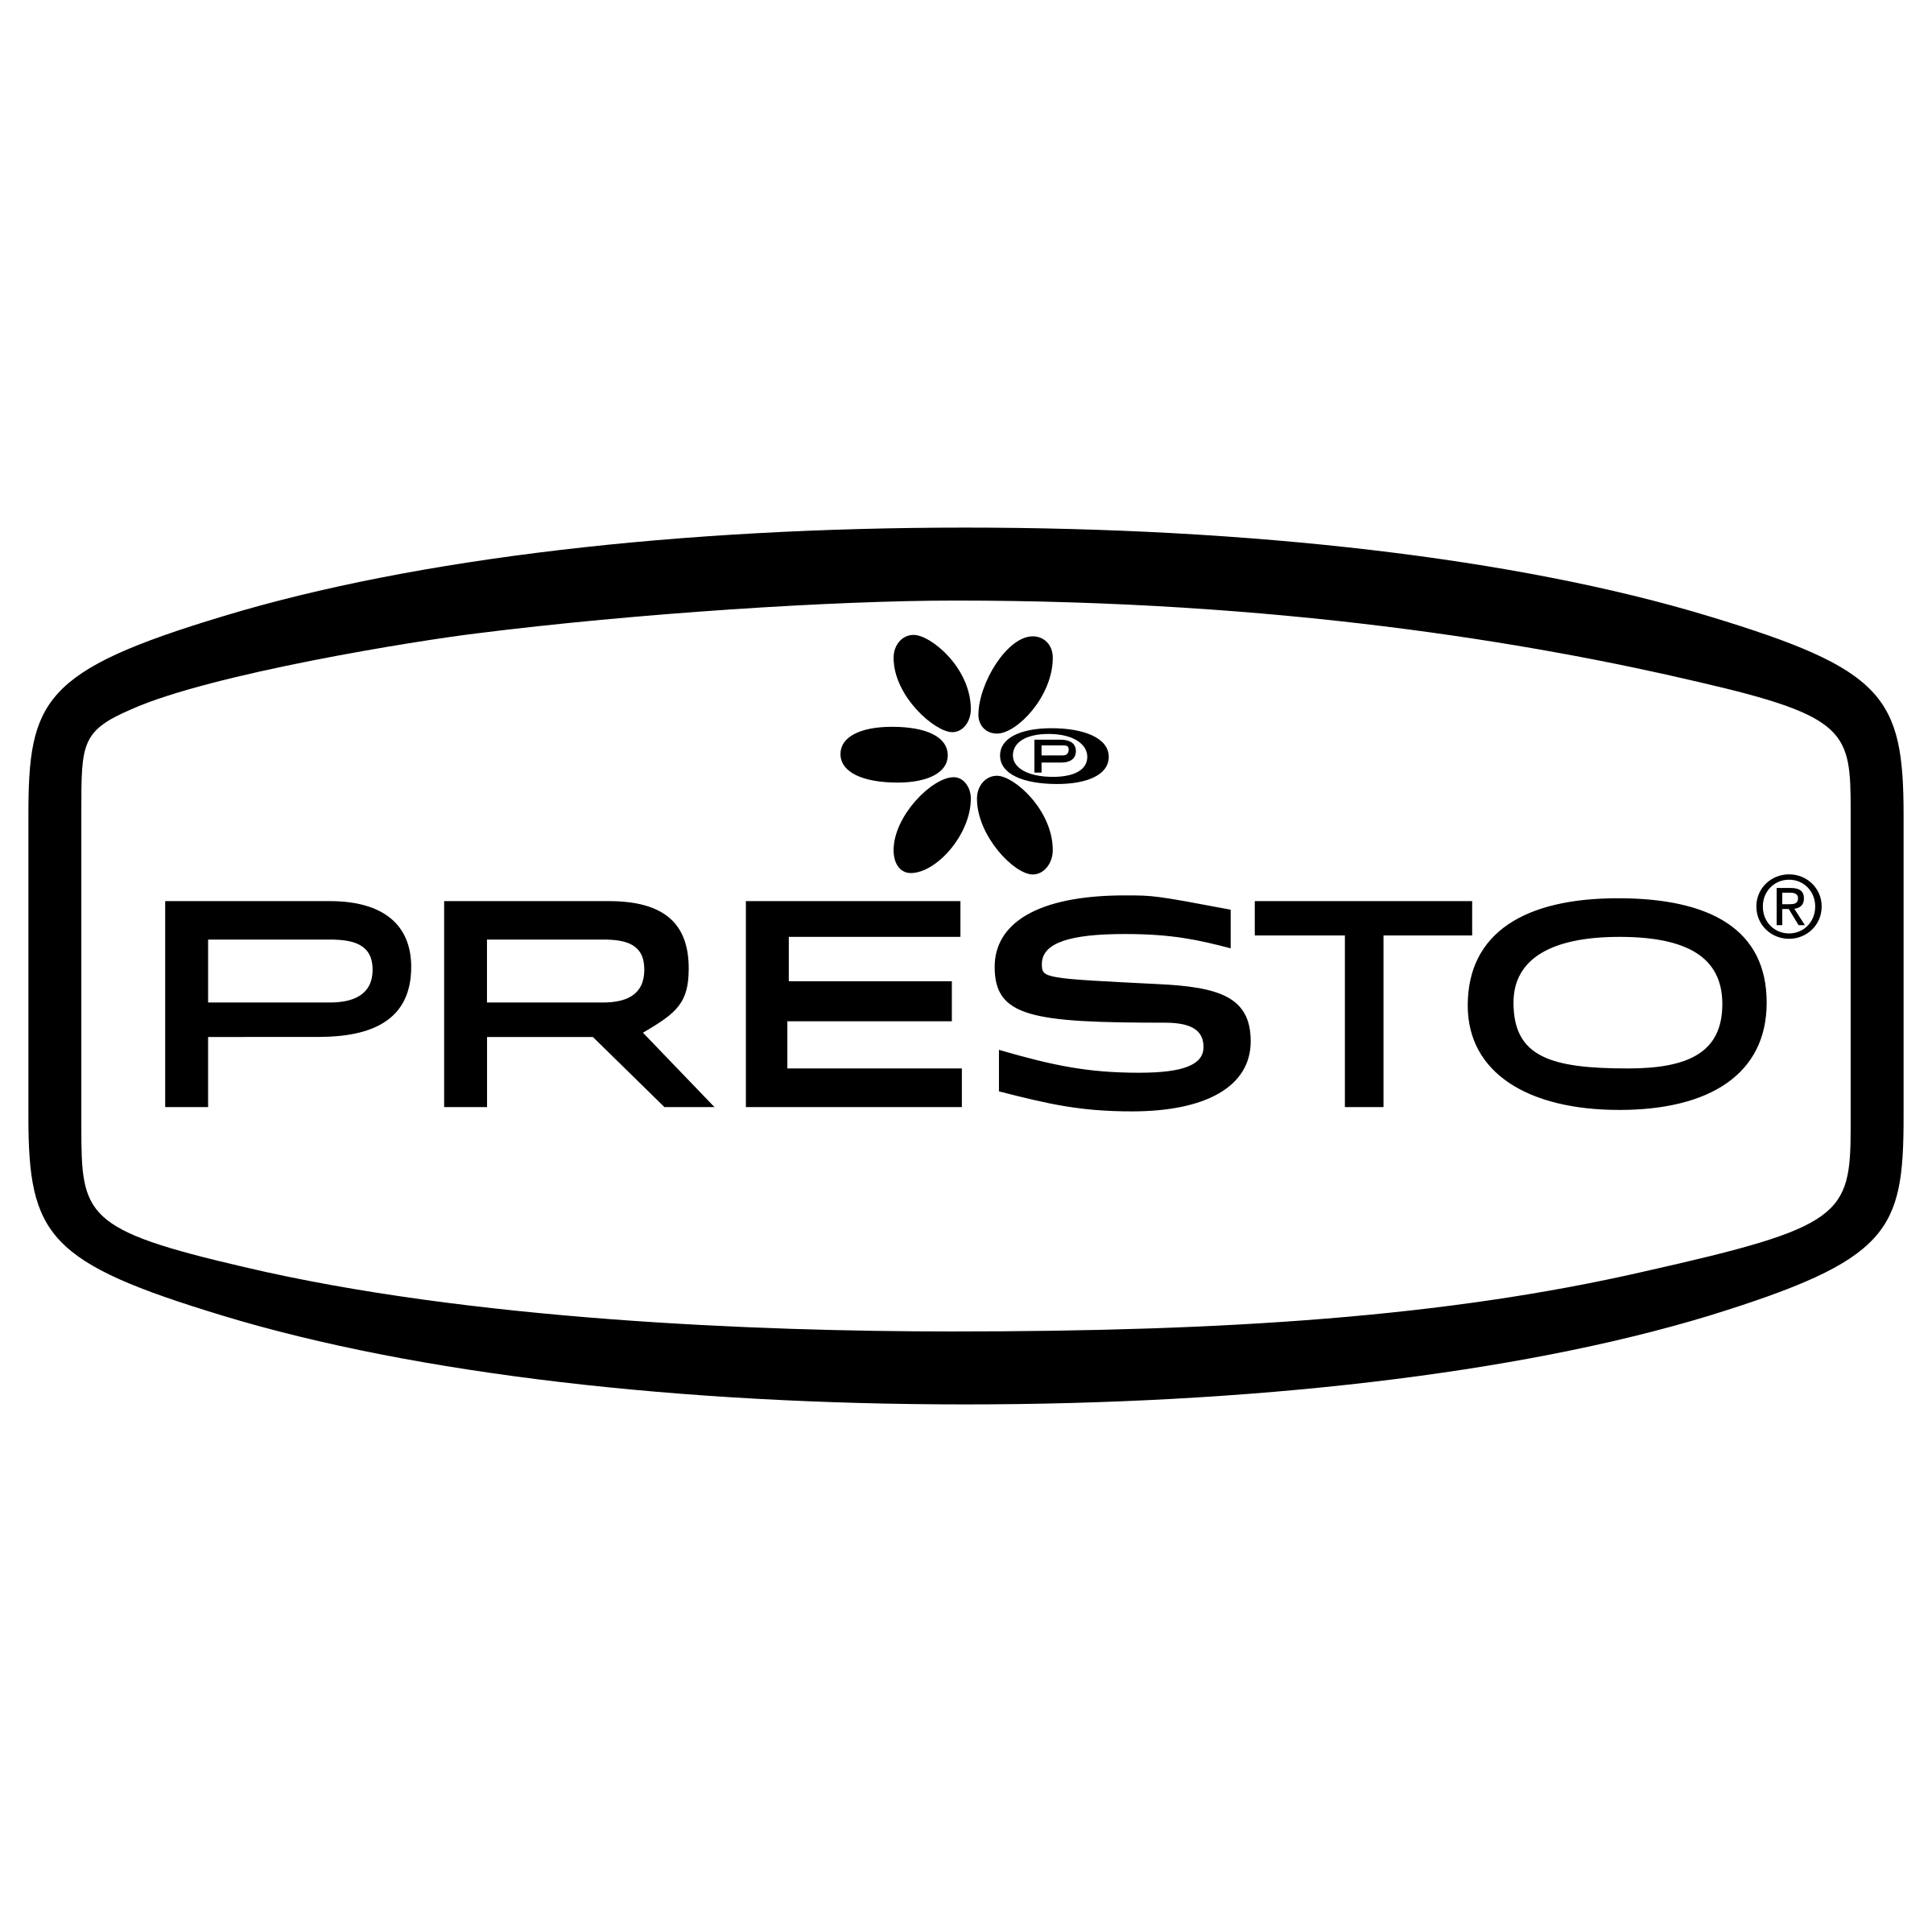 Presto Logo - Presto Logo PNG Transparent & SVG Vector